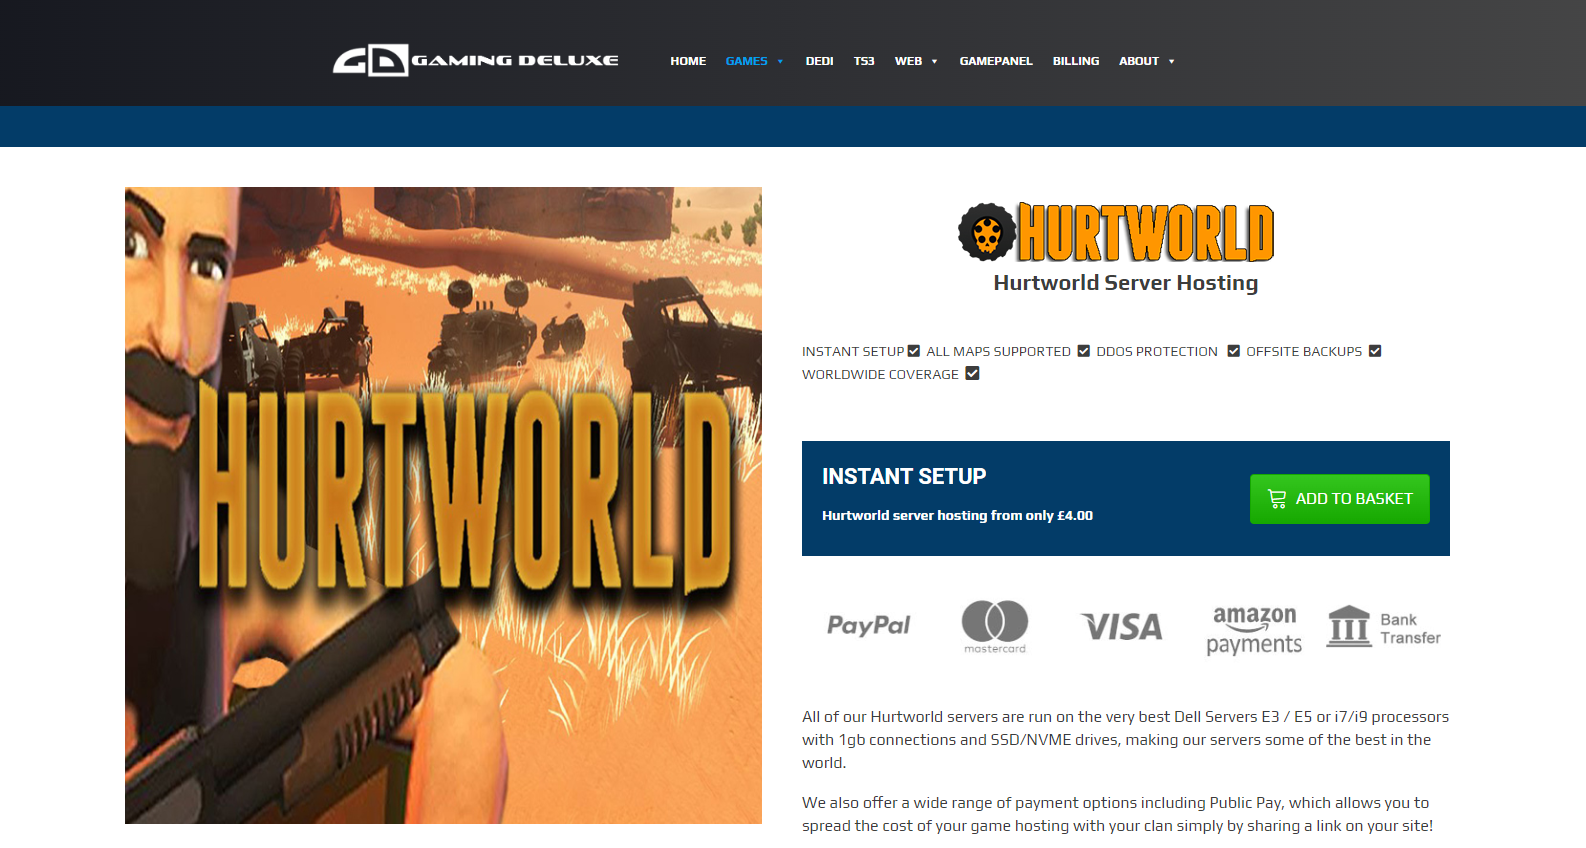 Hurtworld Gamingdeluxe